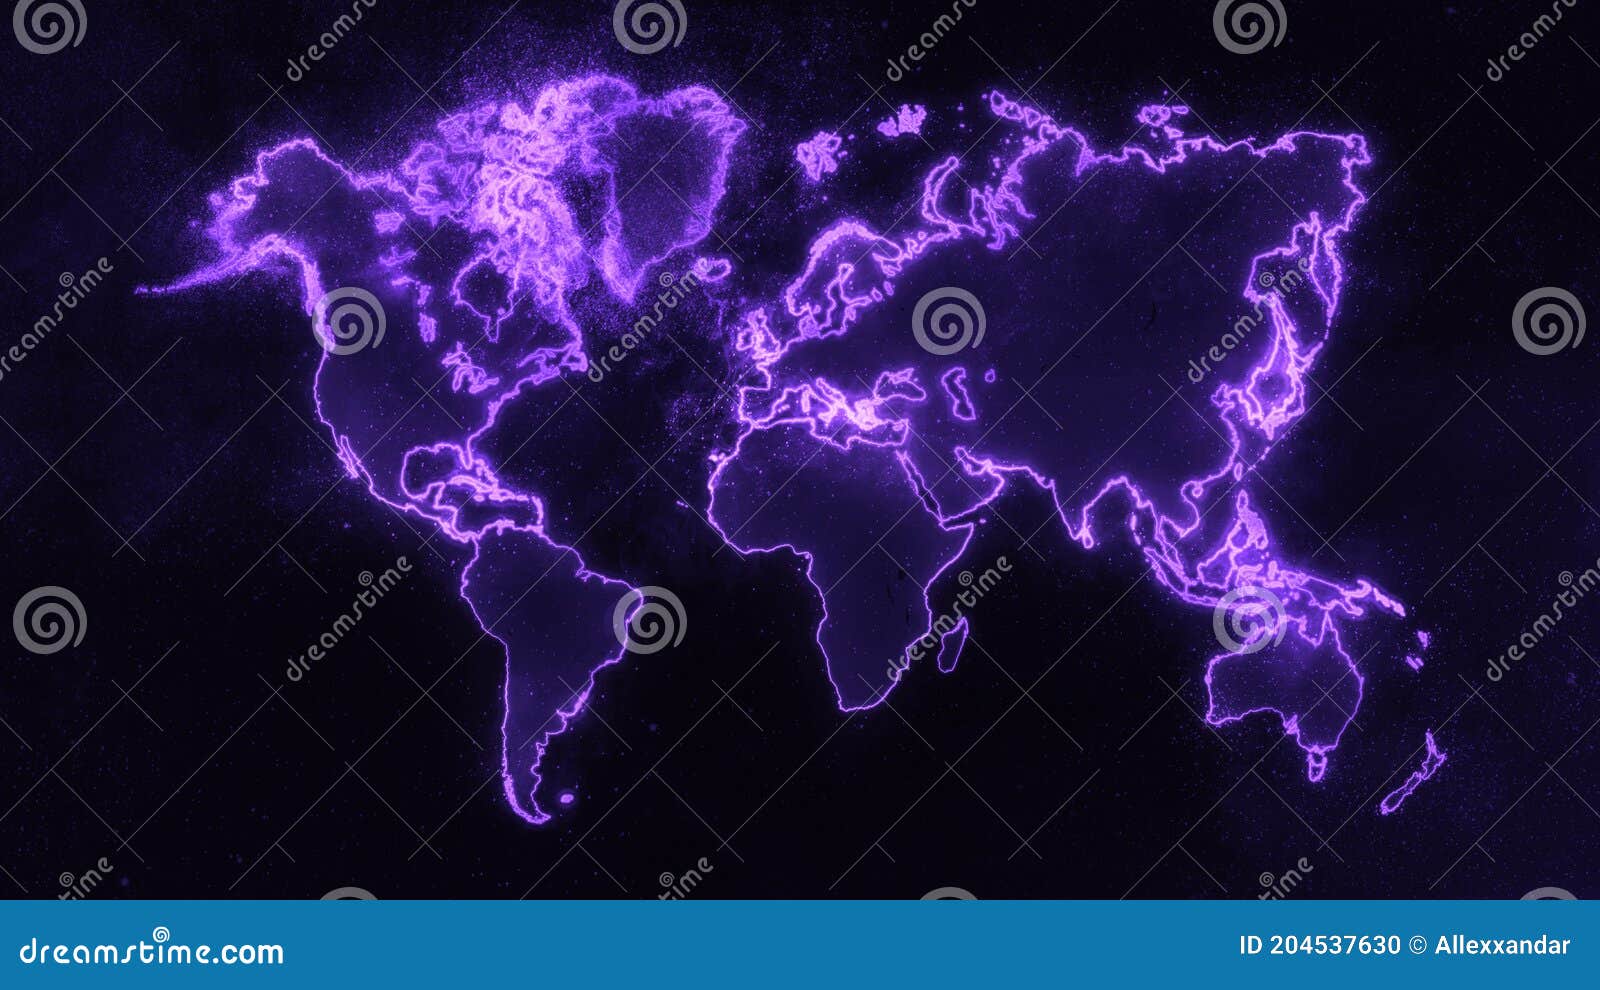 colorful worldÃÂ mapÃÂ on dark background, violetÃÂ glowing world map